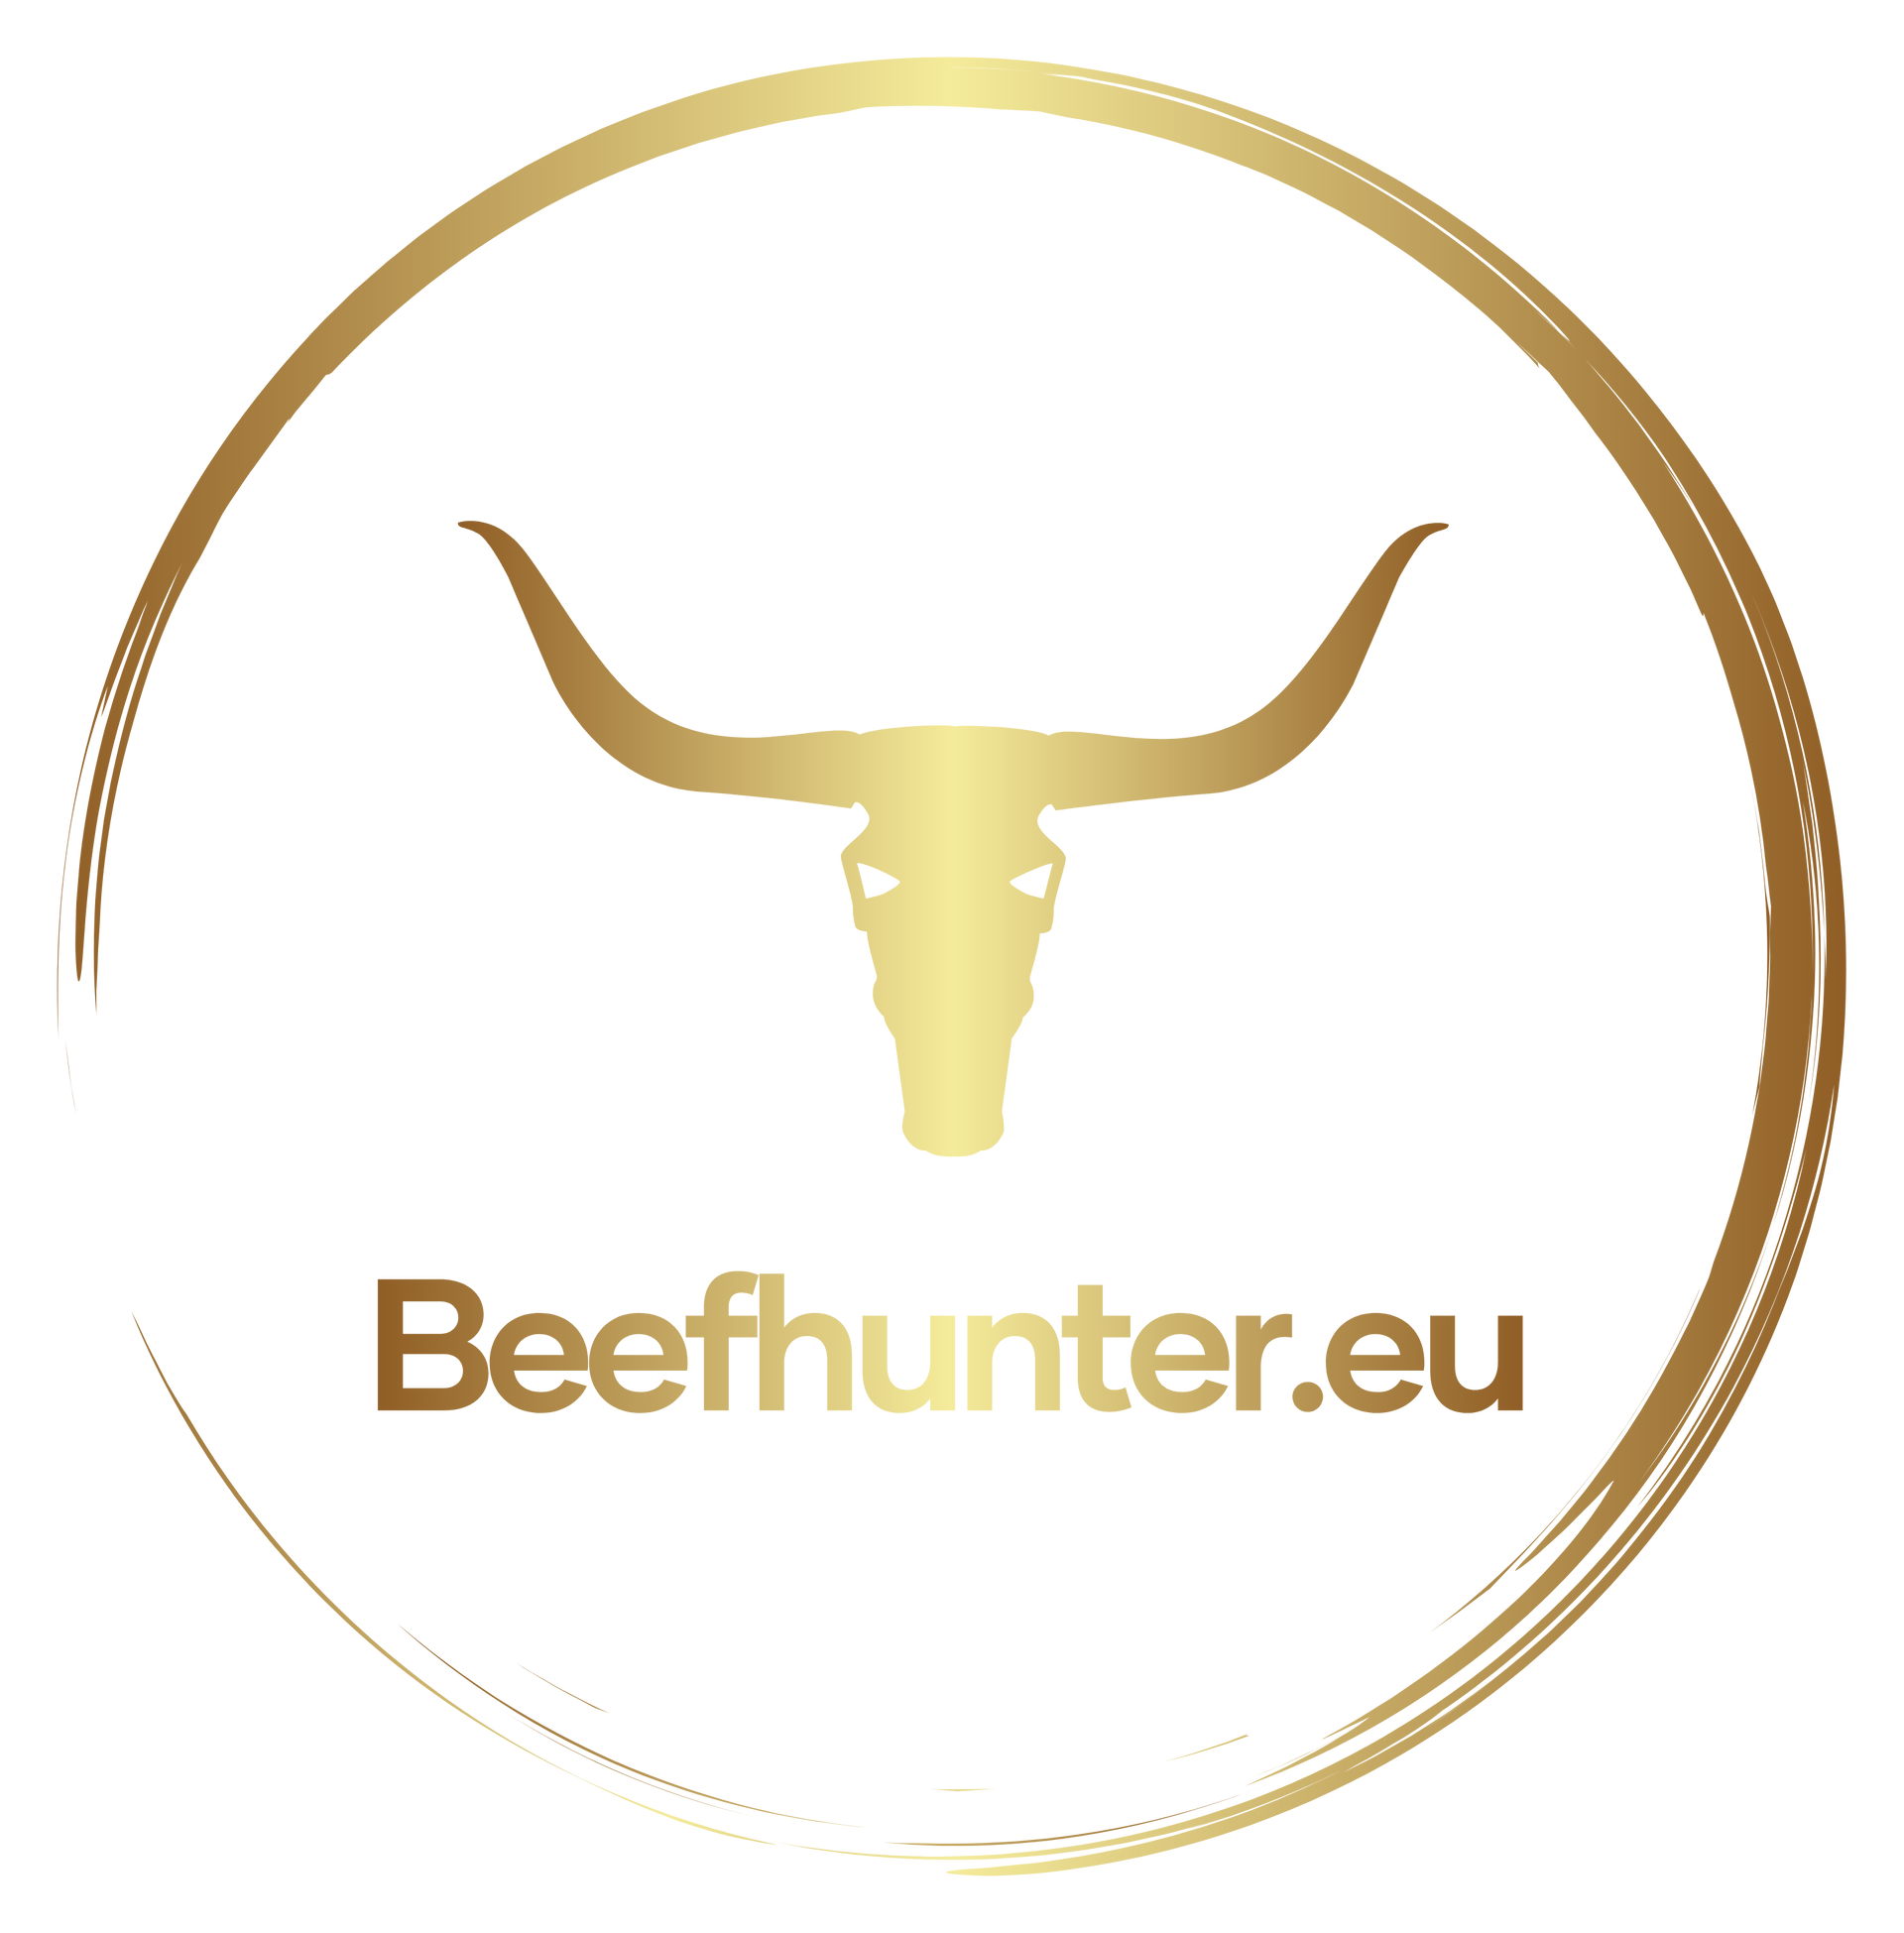 Beefhunter